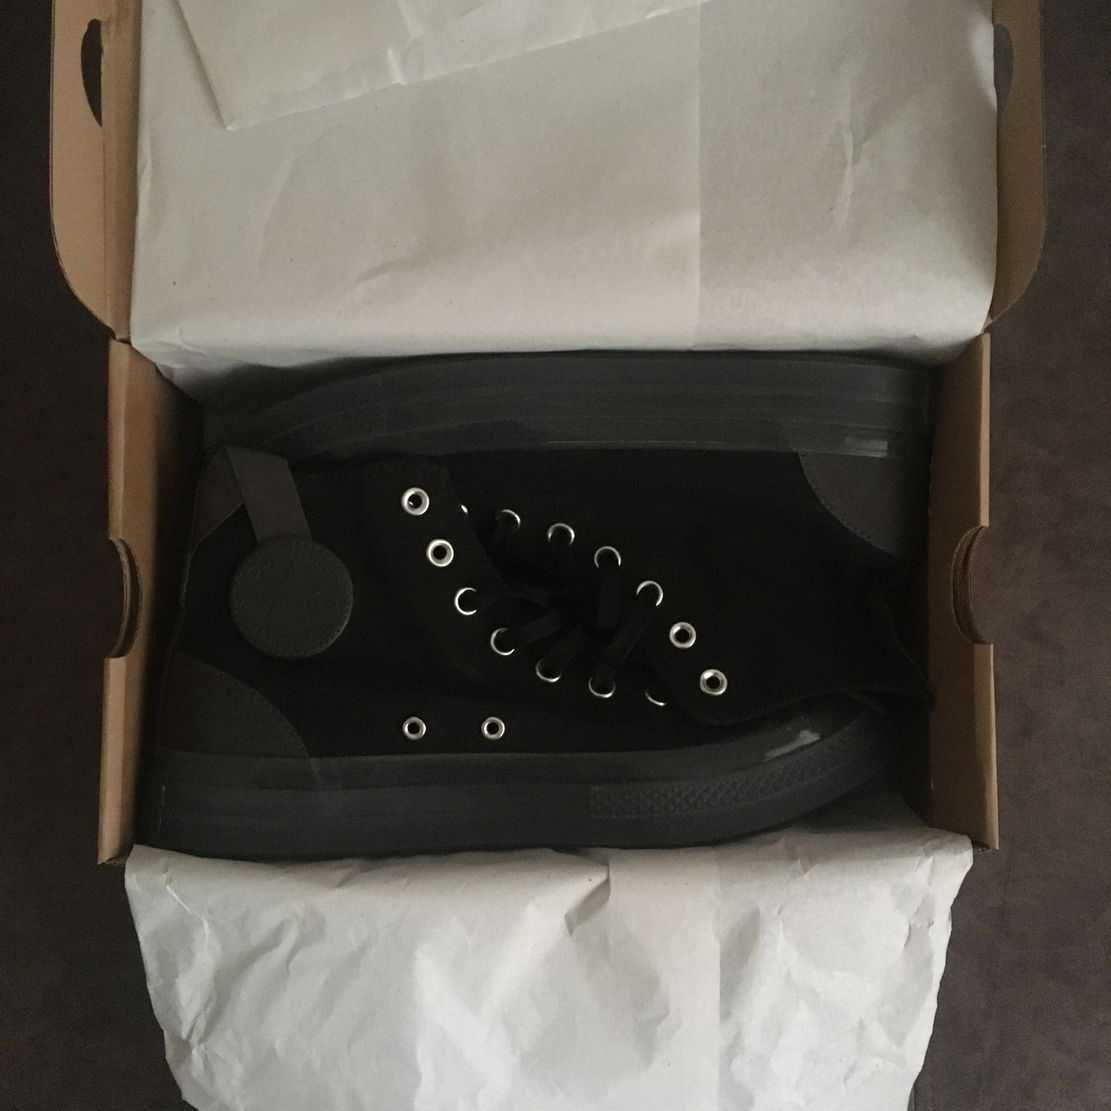 Limited! Nowe buty Converse Chuck Taylor CX trampki star czarne black